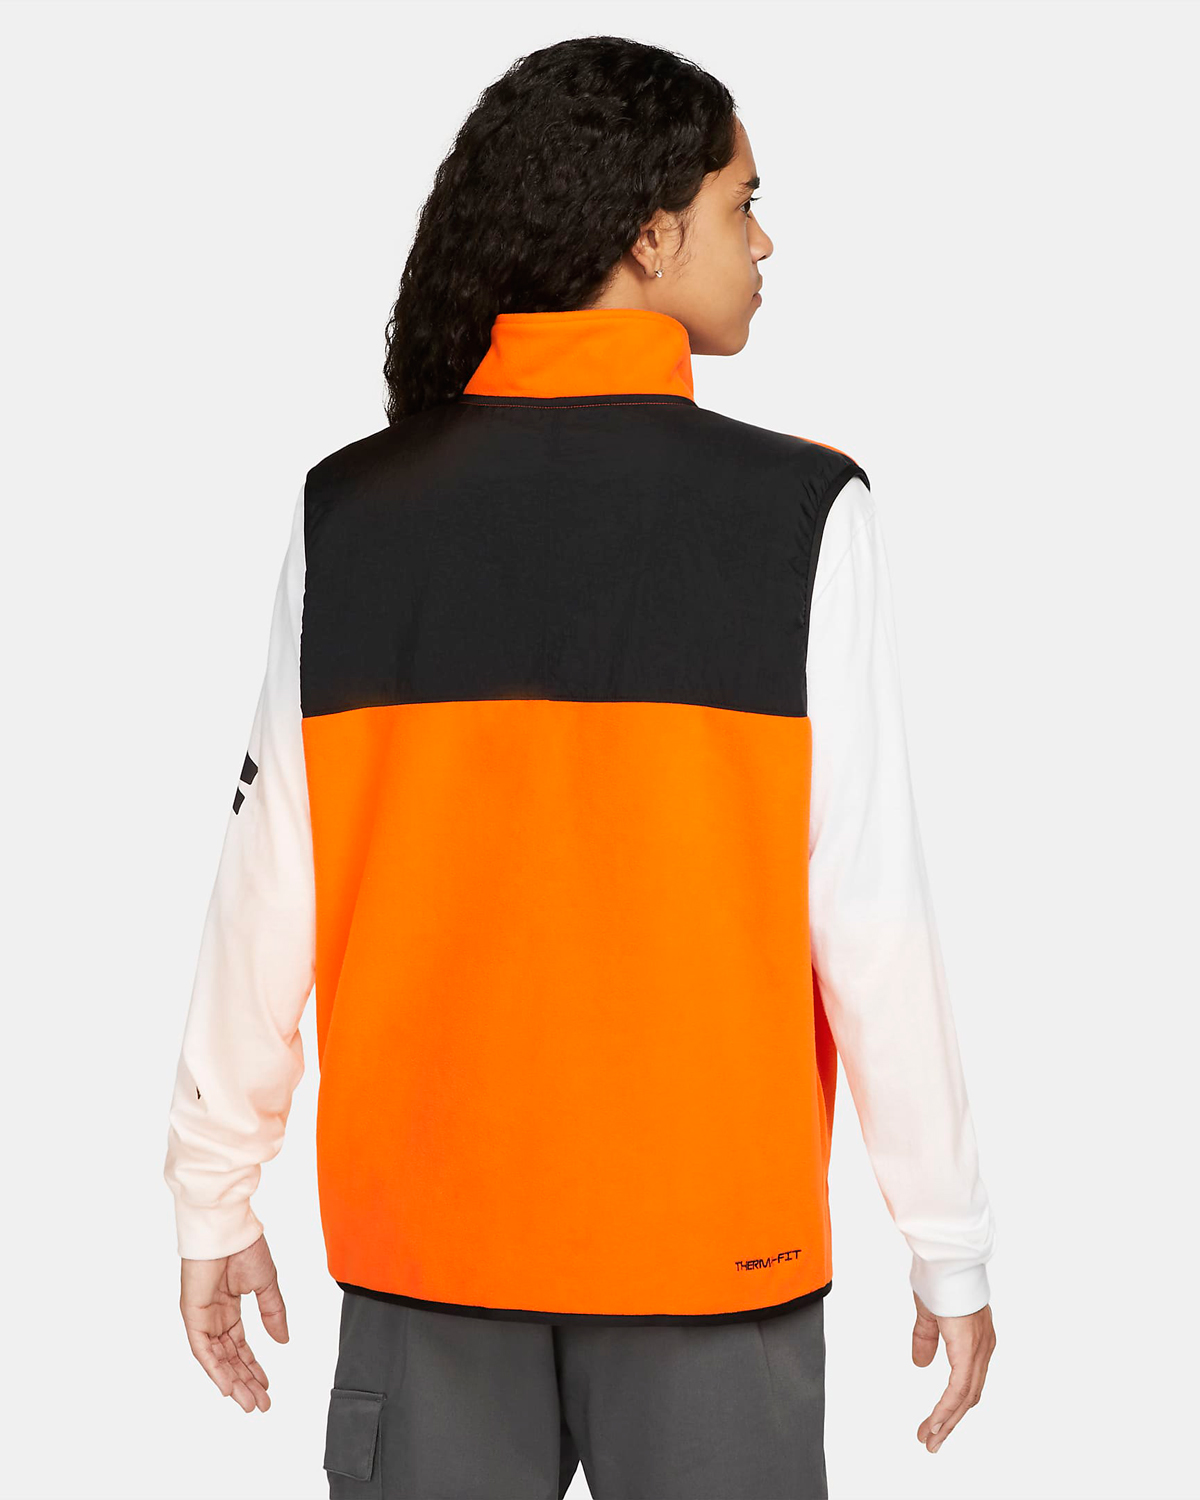 nike-sportswear-utility-vest-safety-orange-black-2